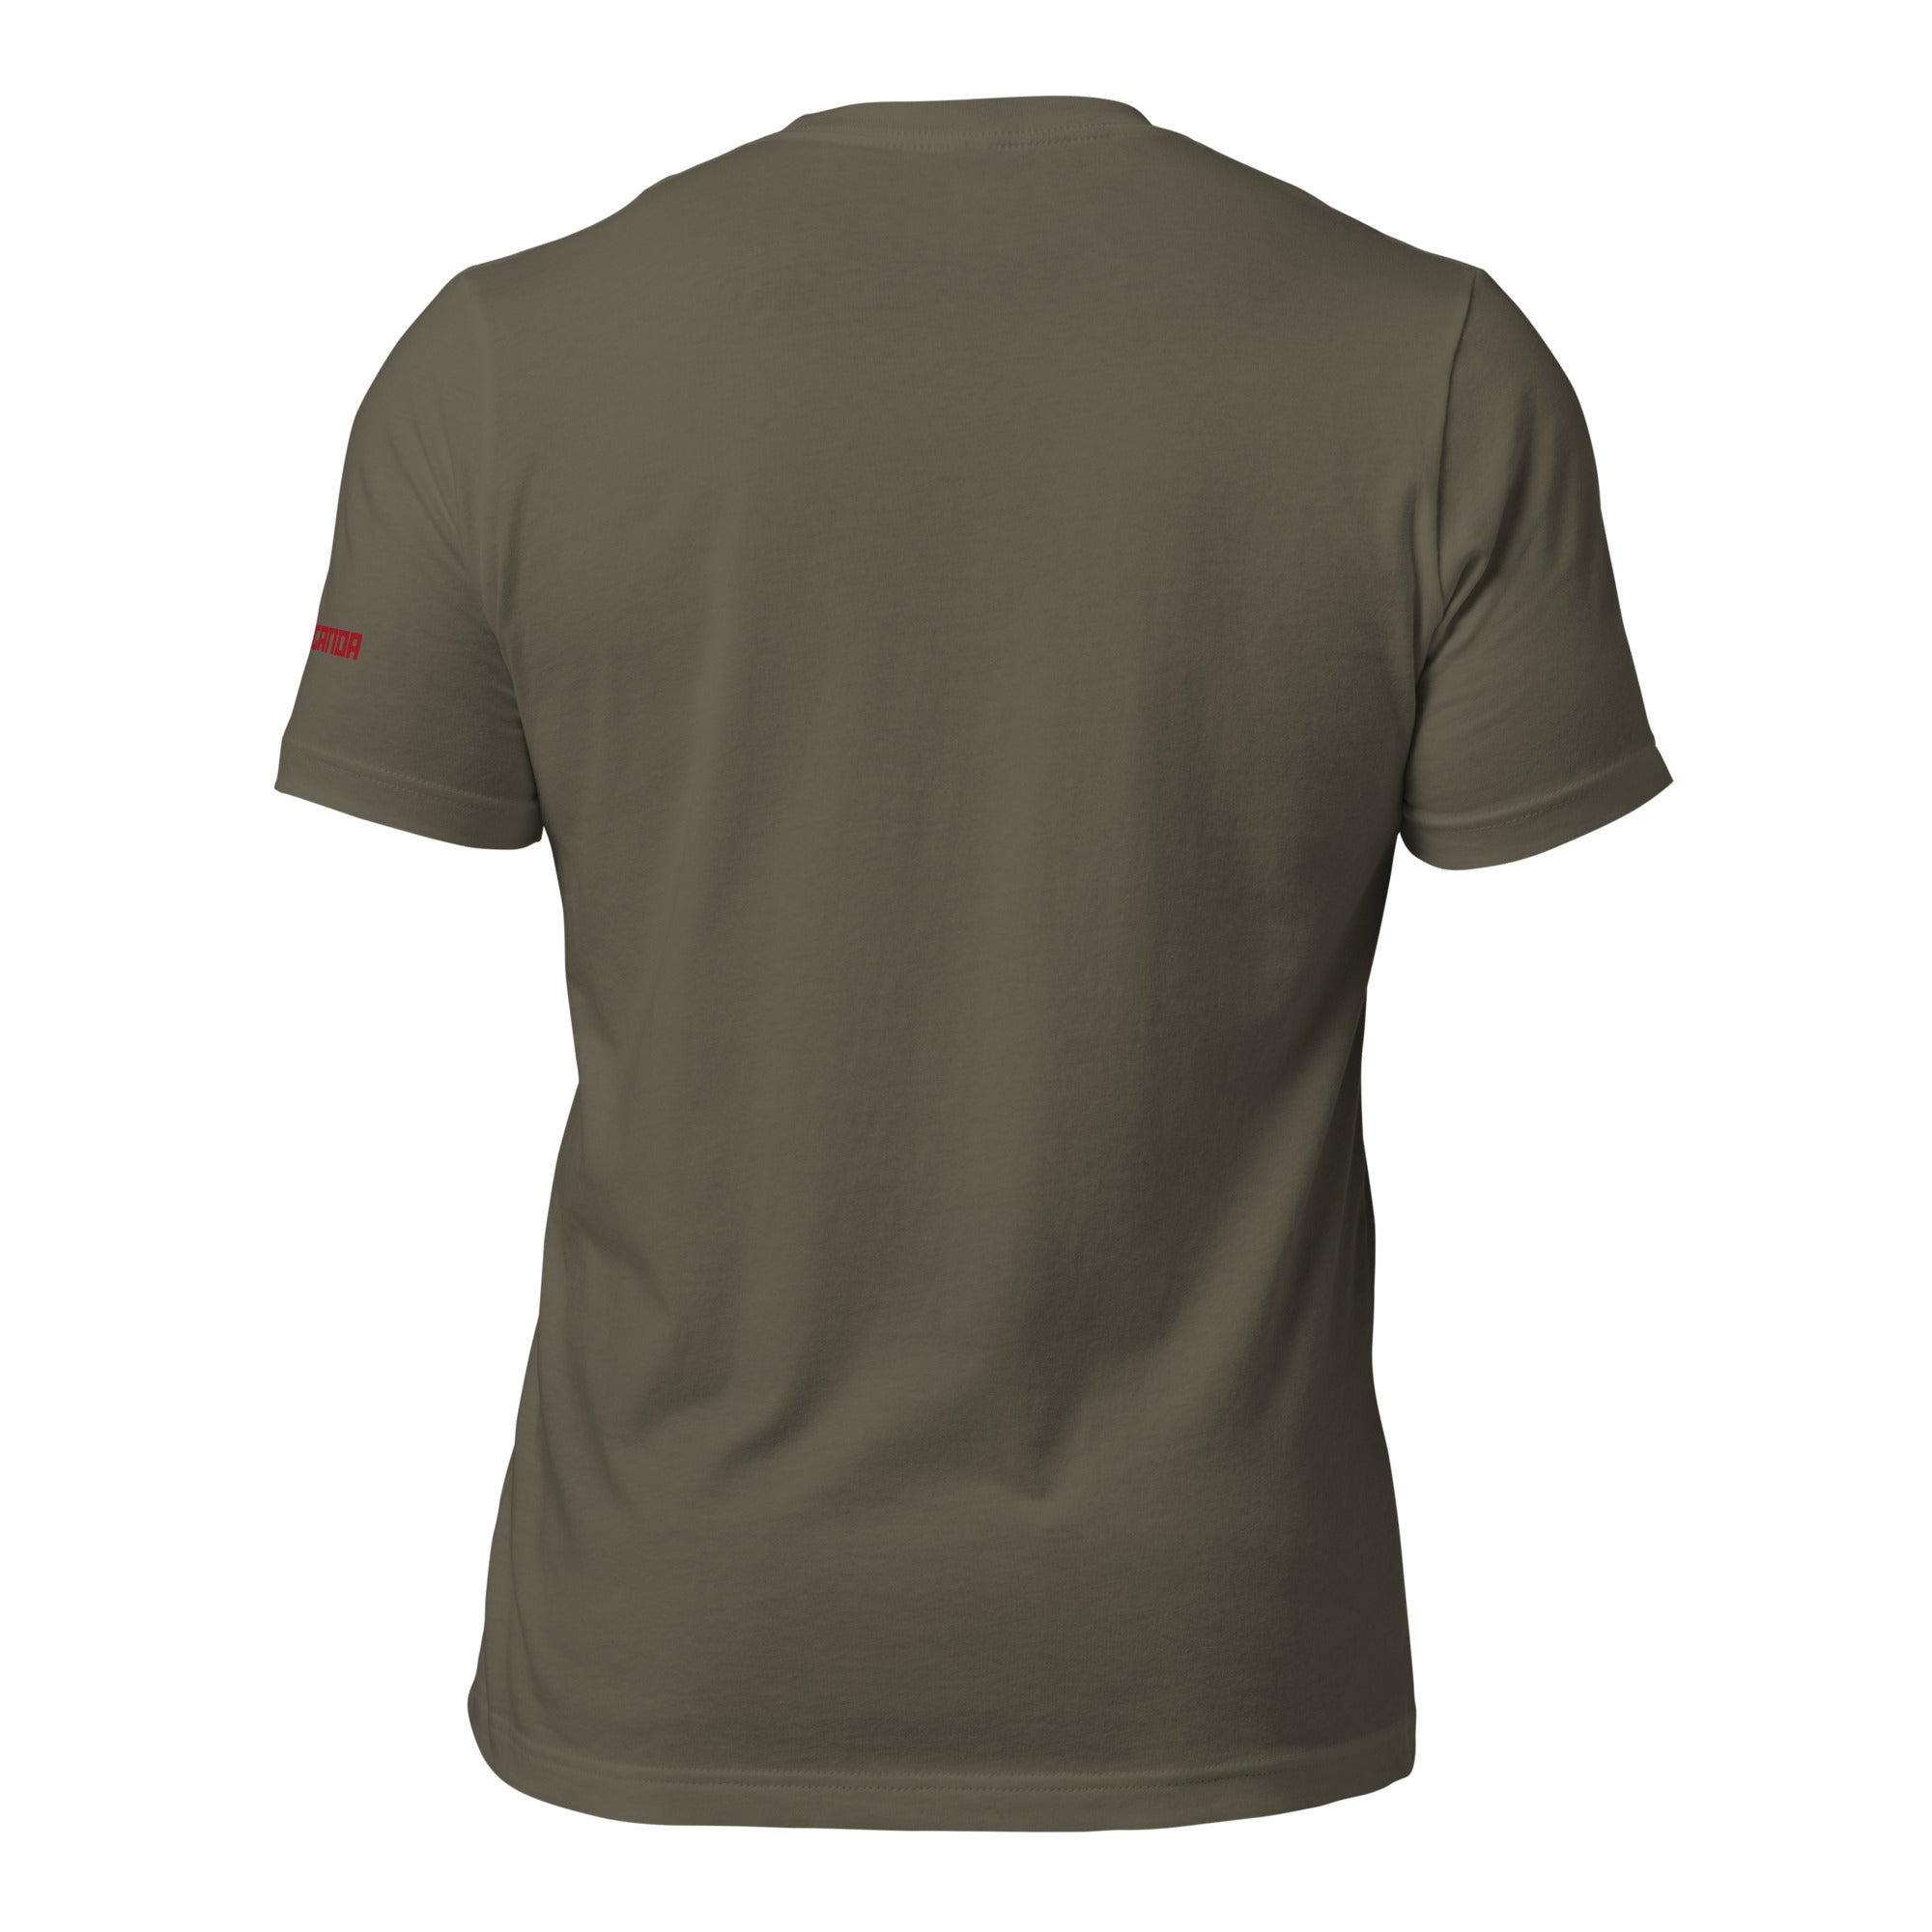 Unisex Crew Neck T-Shirt - Propaganda - GRAPHIC T-SHIRTS